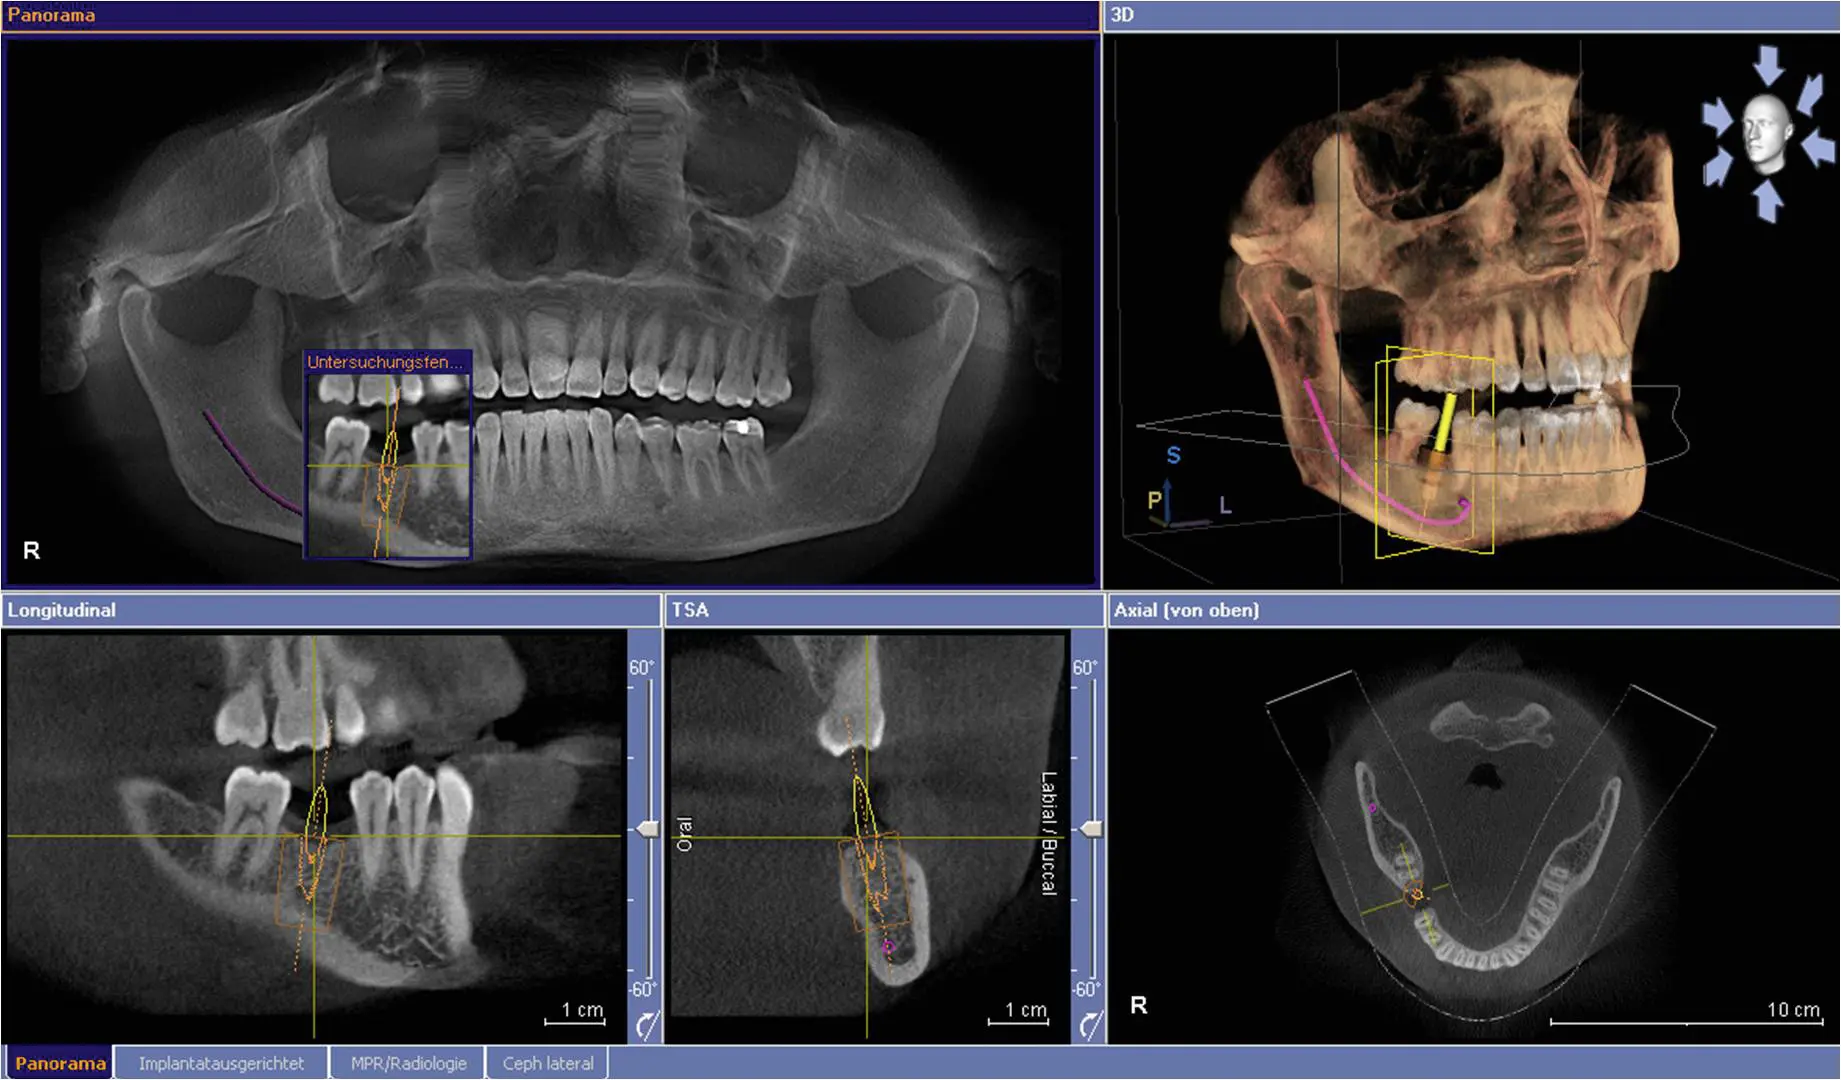 Cum se evalueaza osul in cazul inserarii unui implant dentar?